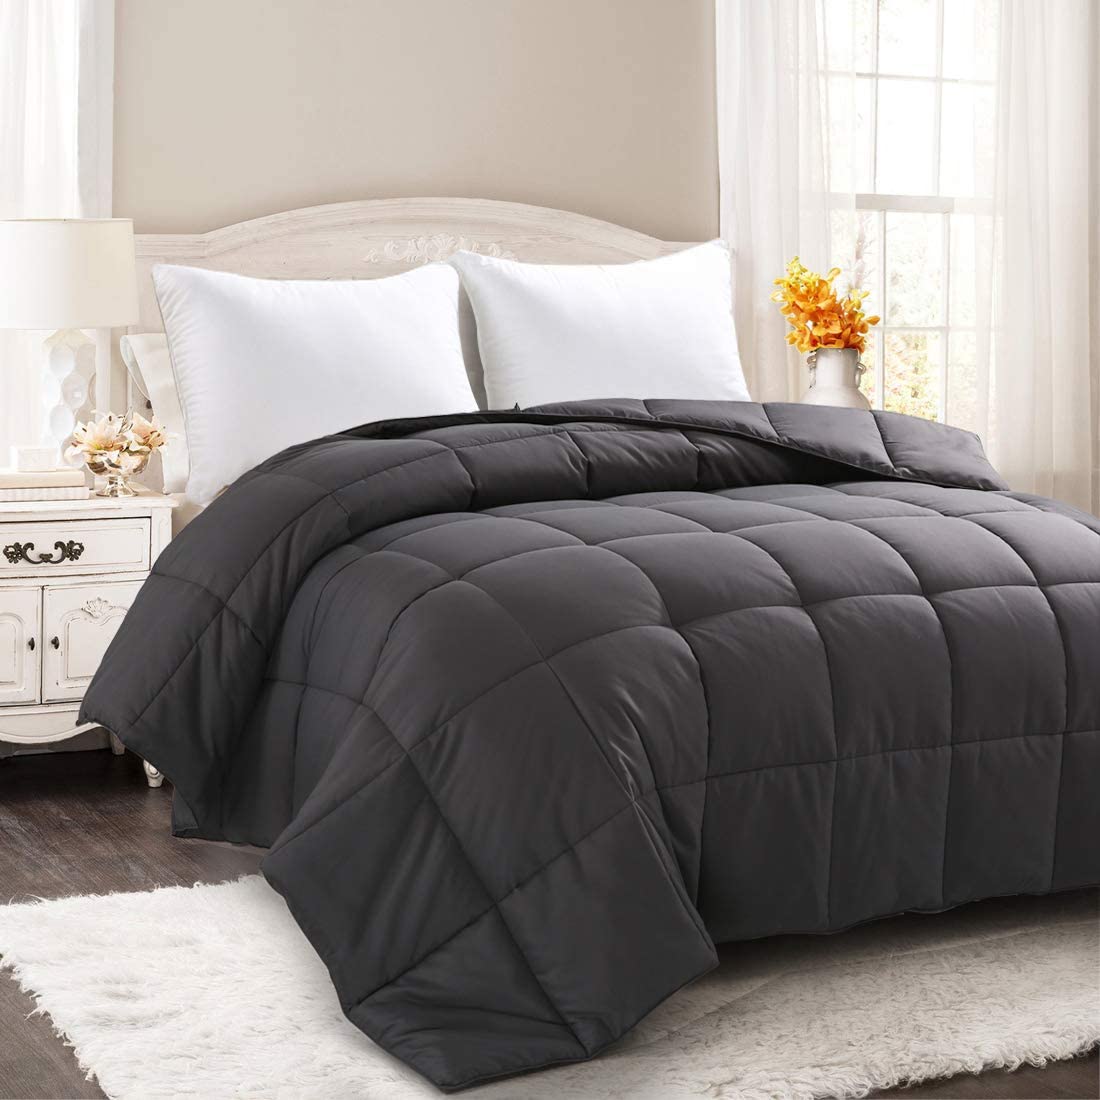 COOSLEEP Geometric Fluffy Comforter